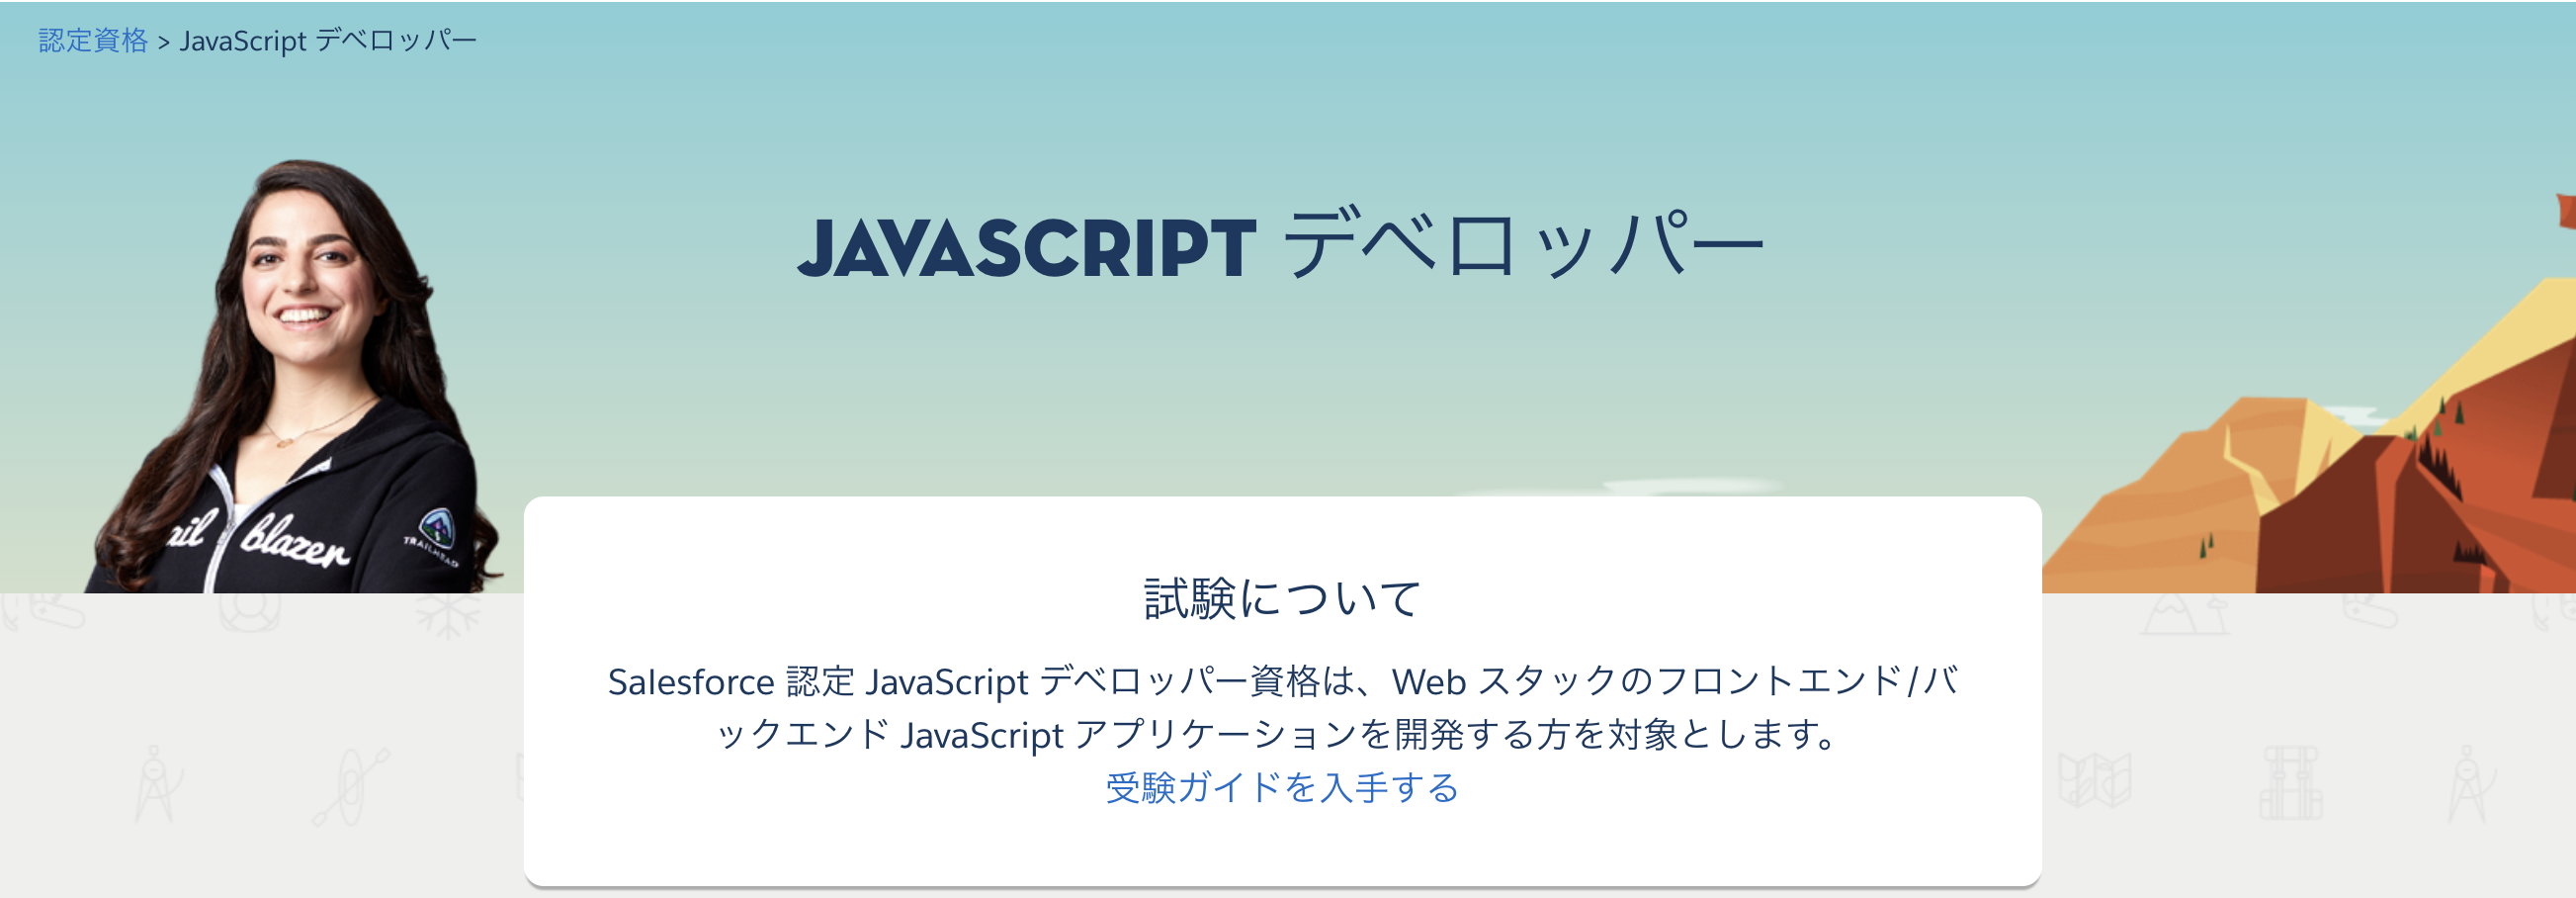 Salesforce 認定 JavaScript デベロッパー